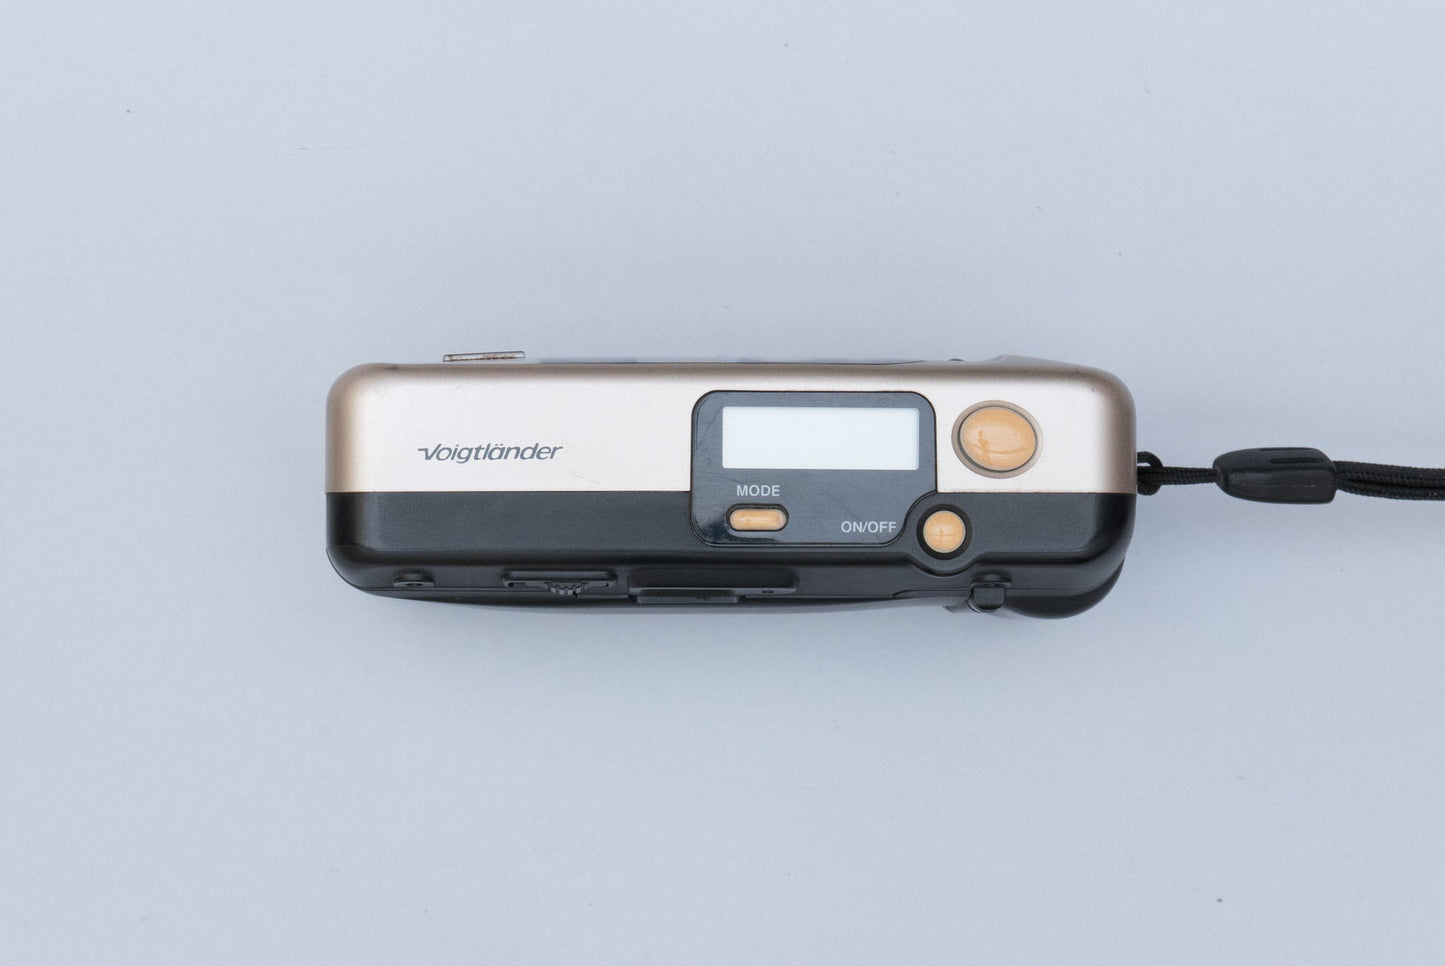 Voigtlander Vitolux Comfort AF Point and Shoot 35mm Compact Film Camera